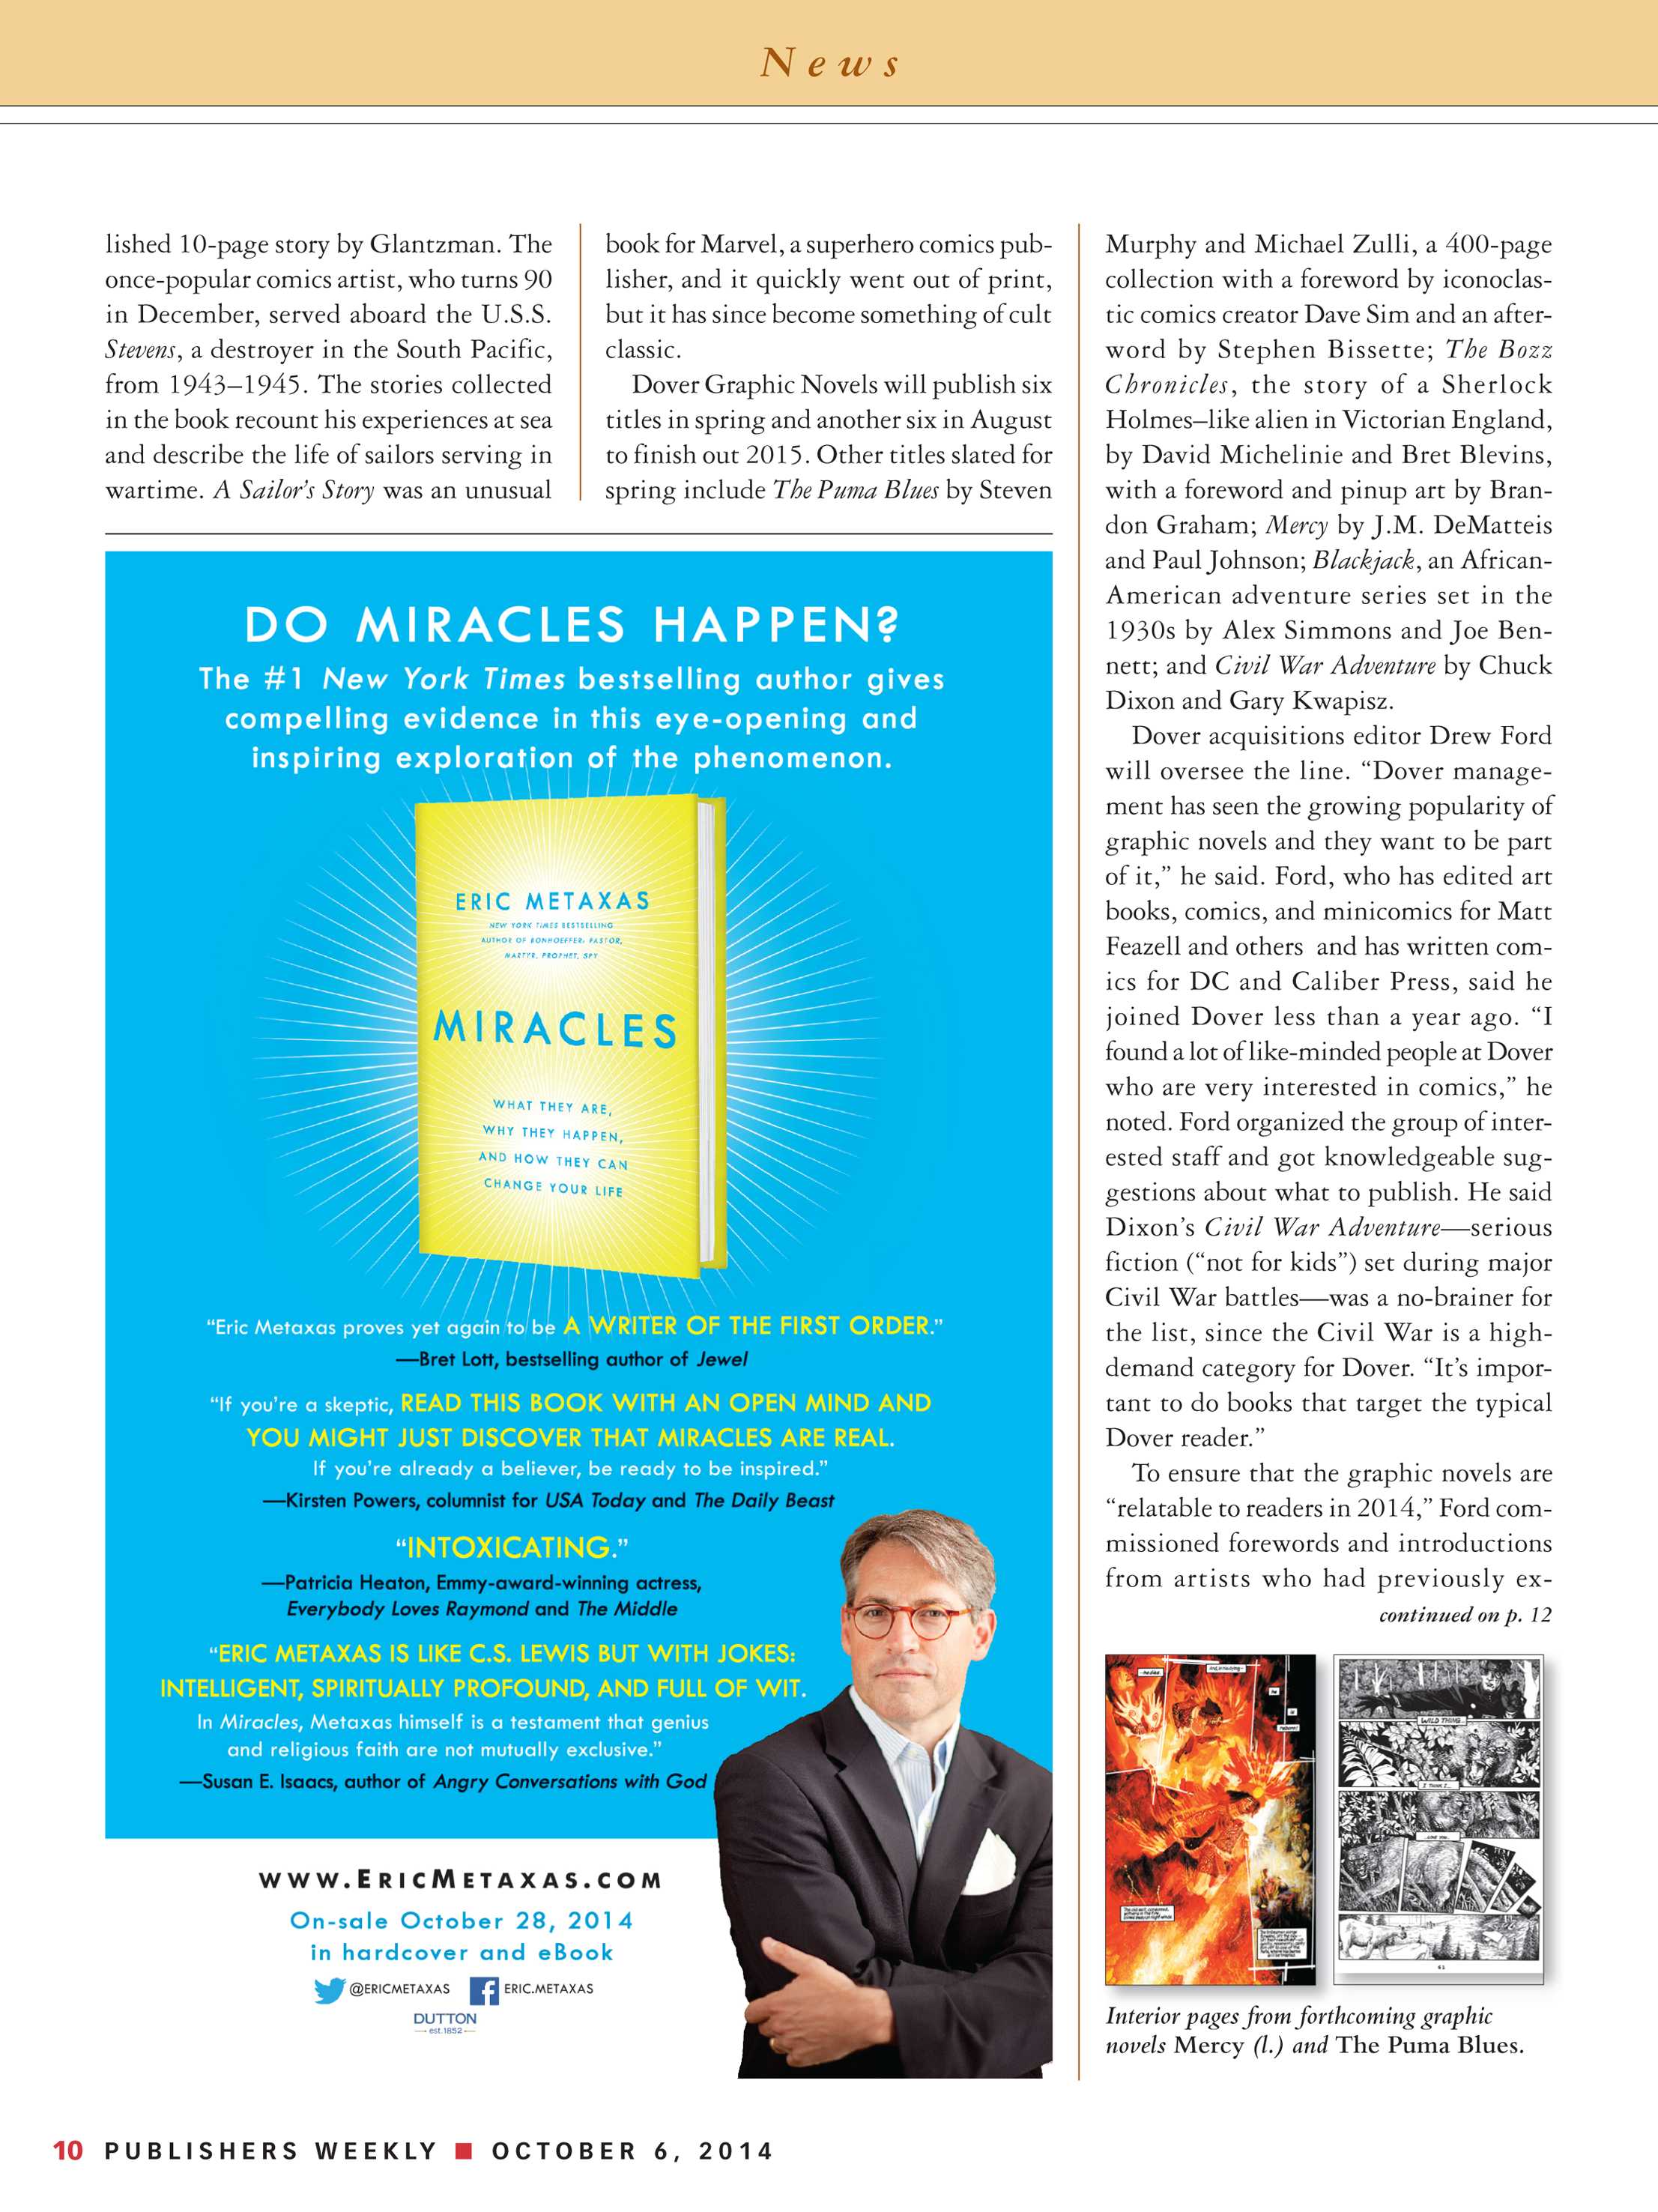 A Series of Miracles: April 2014